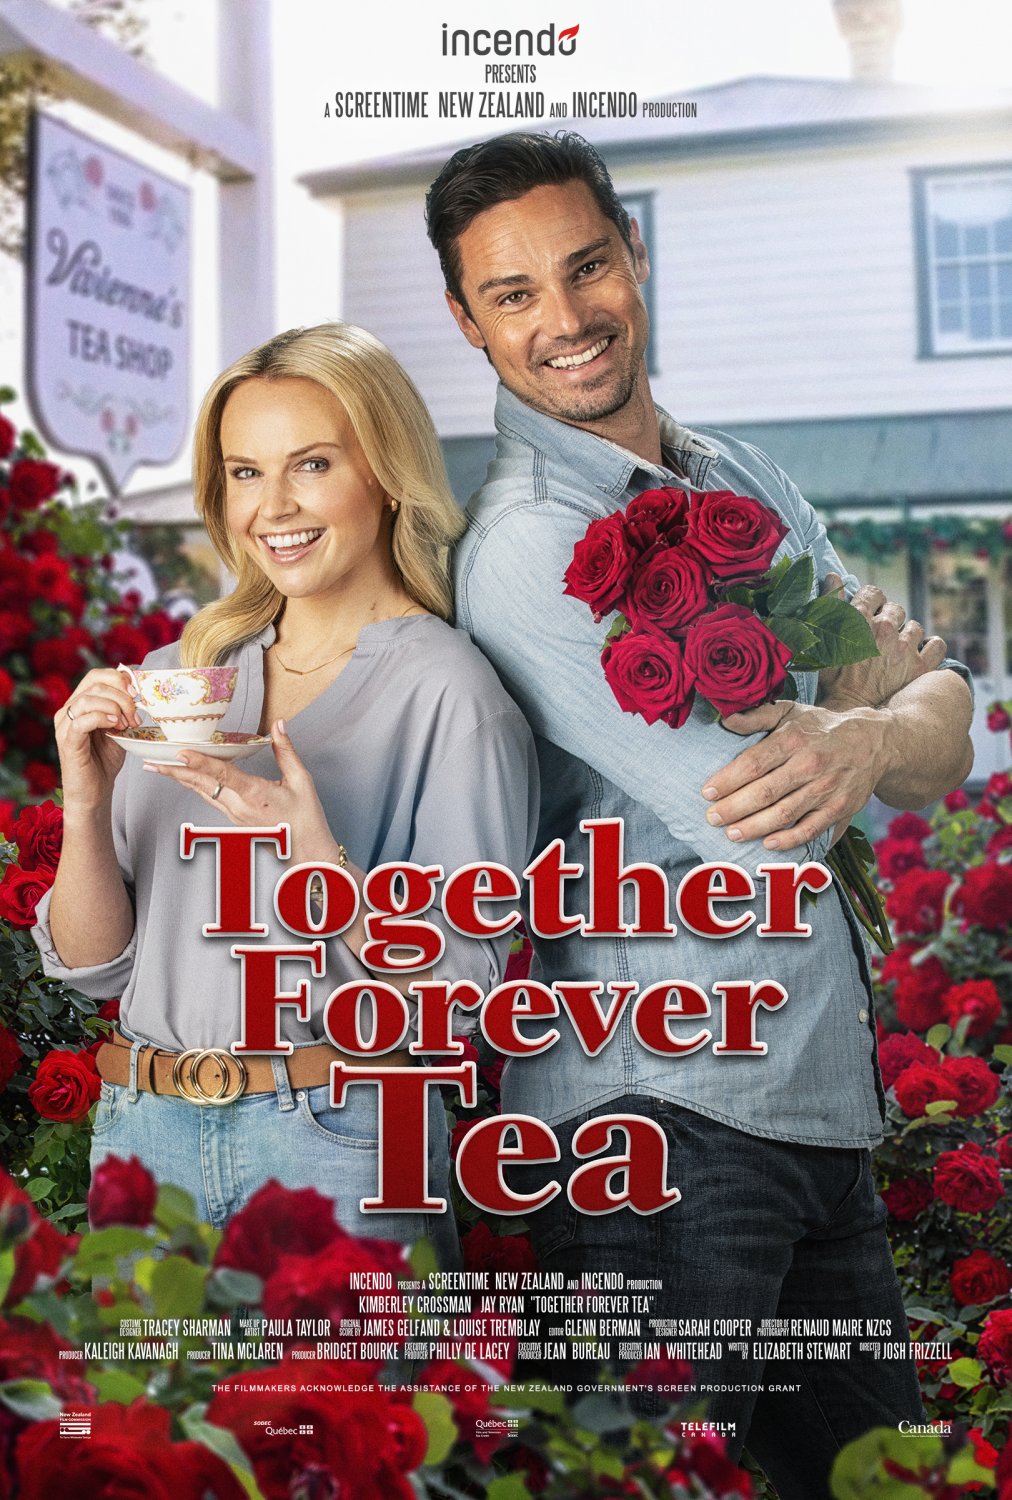 Together Forever Tea DVD 2021 Incendo Movie